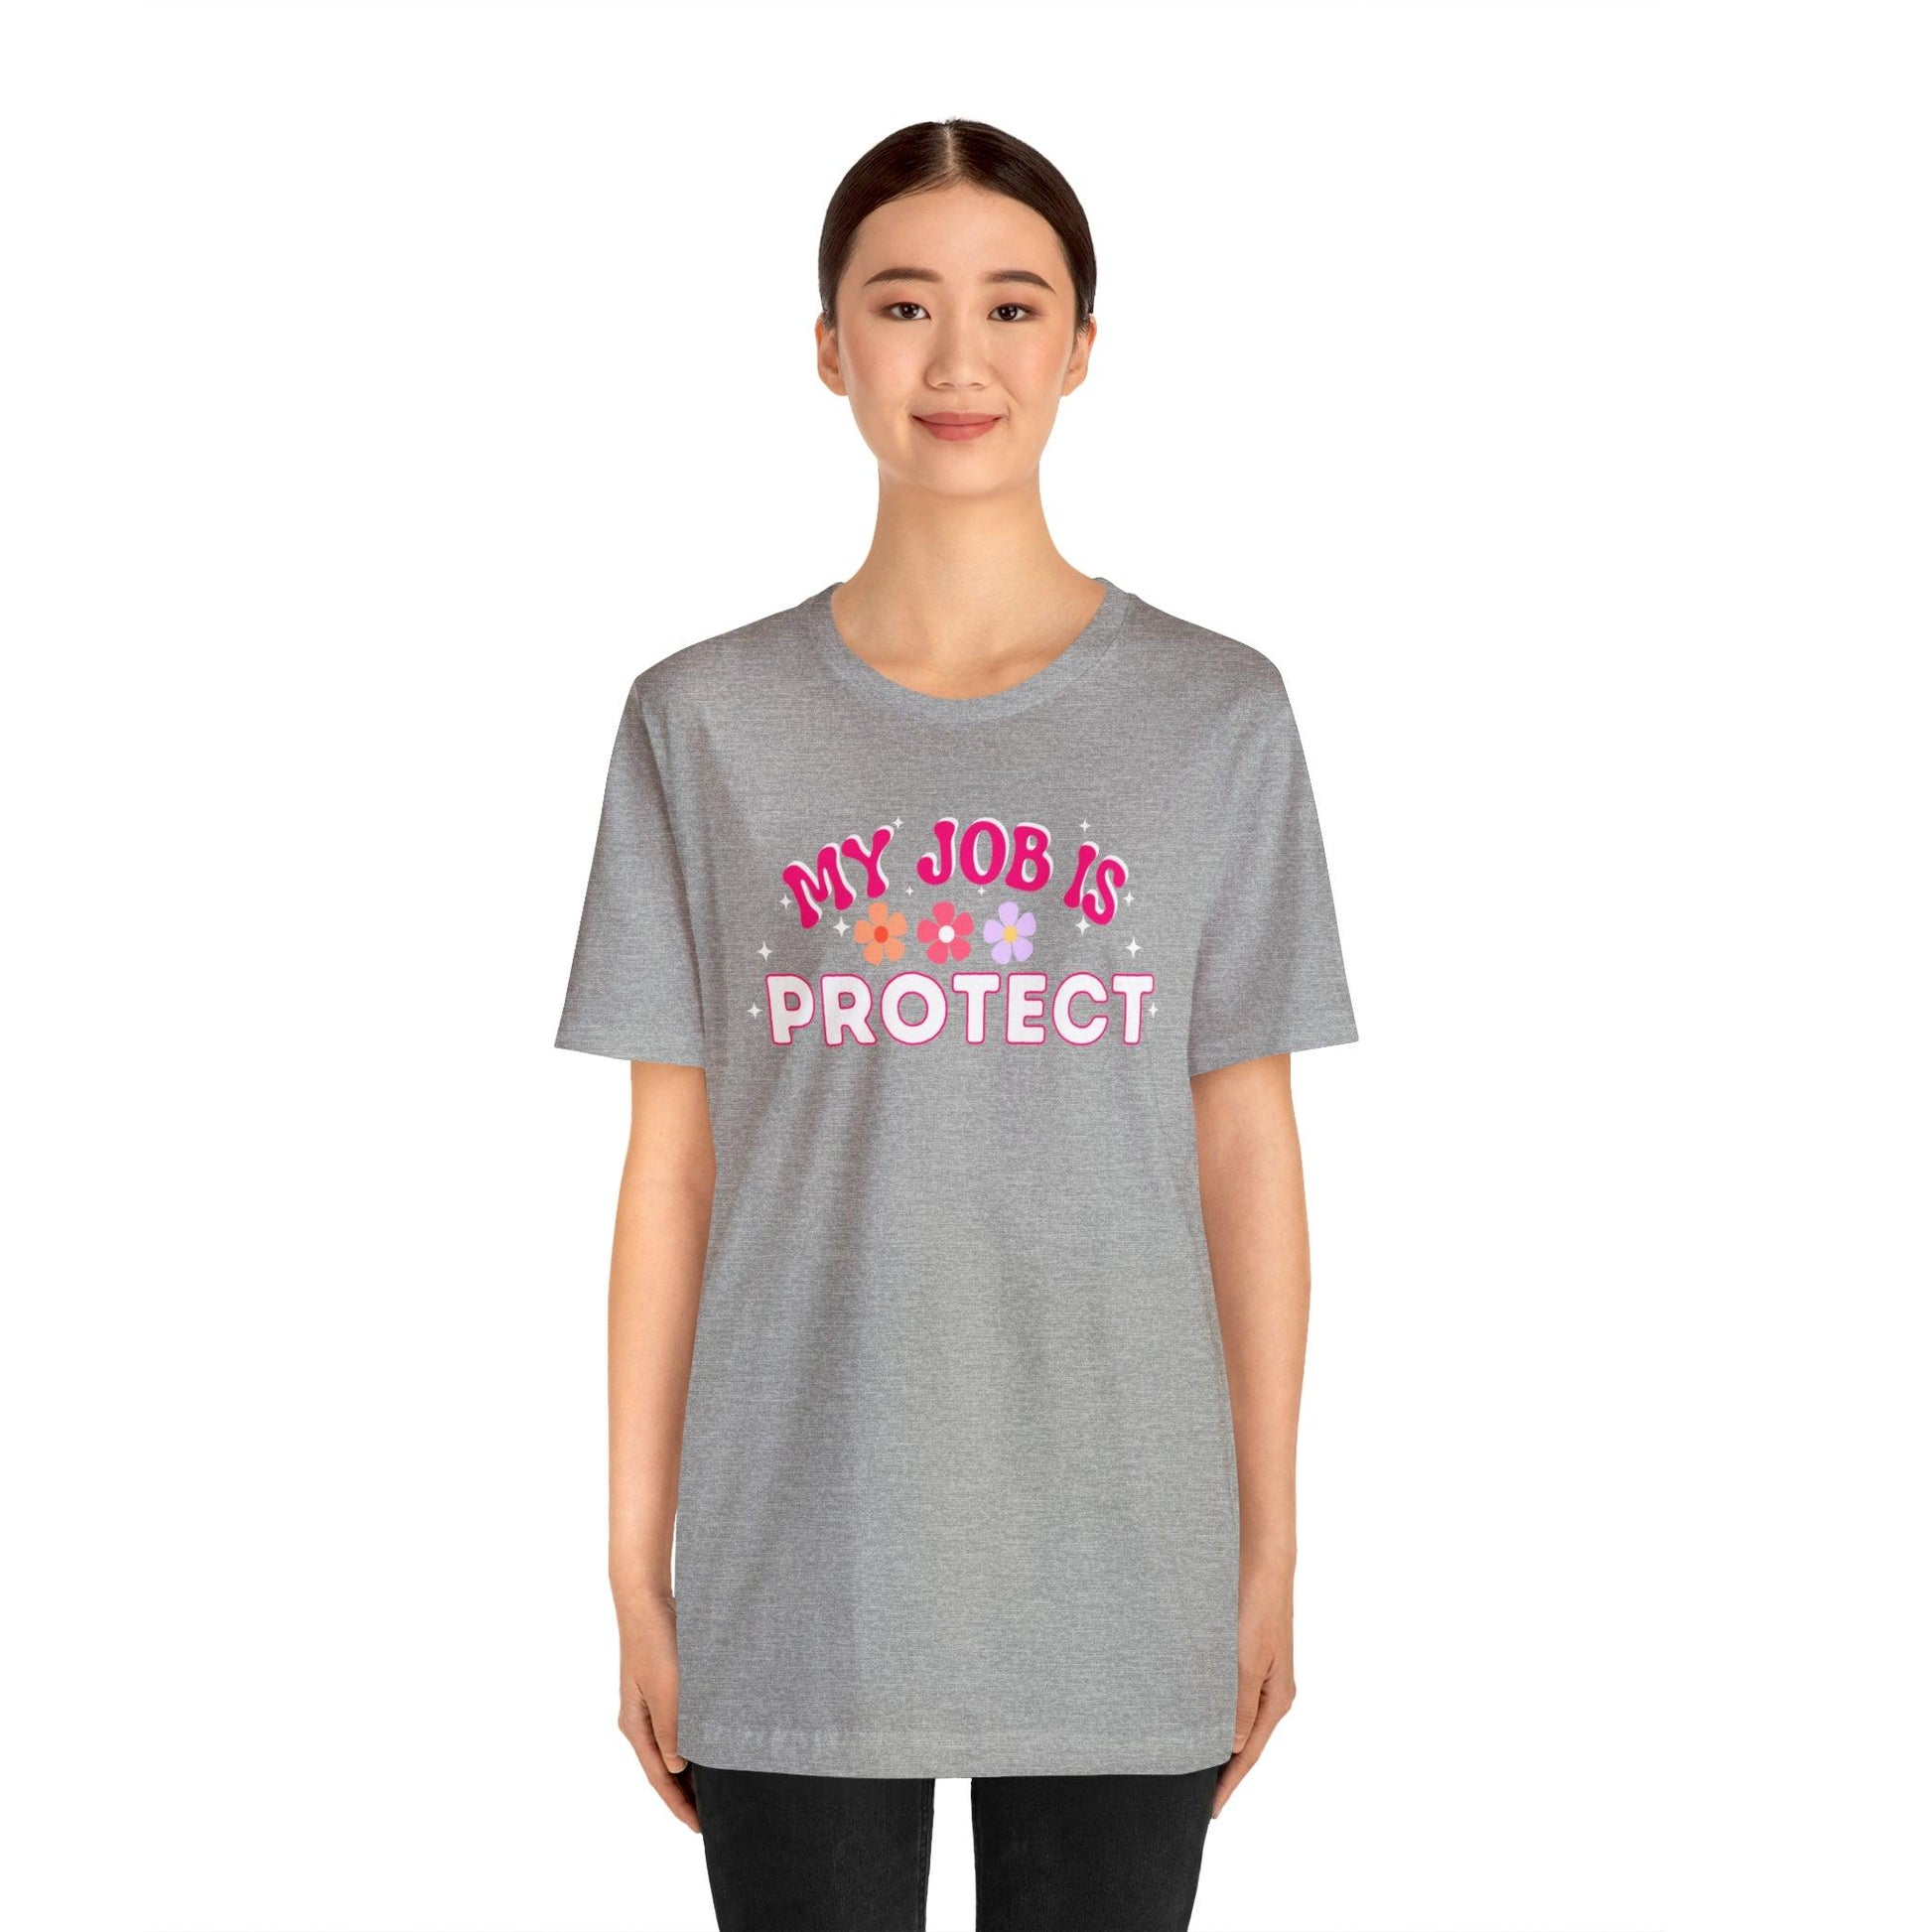 My Job is Protect Shirt Police Shirt Security Shirt Dad Shirt Mom Shirt Teacher Shirt Military Shirt - Giftsmojo